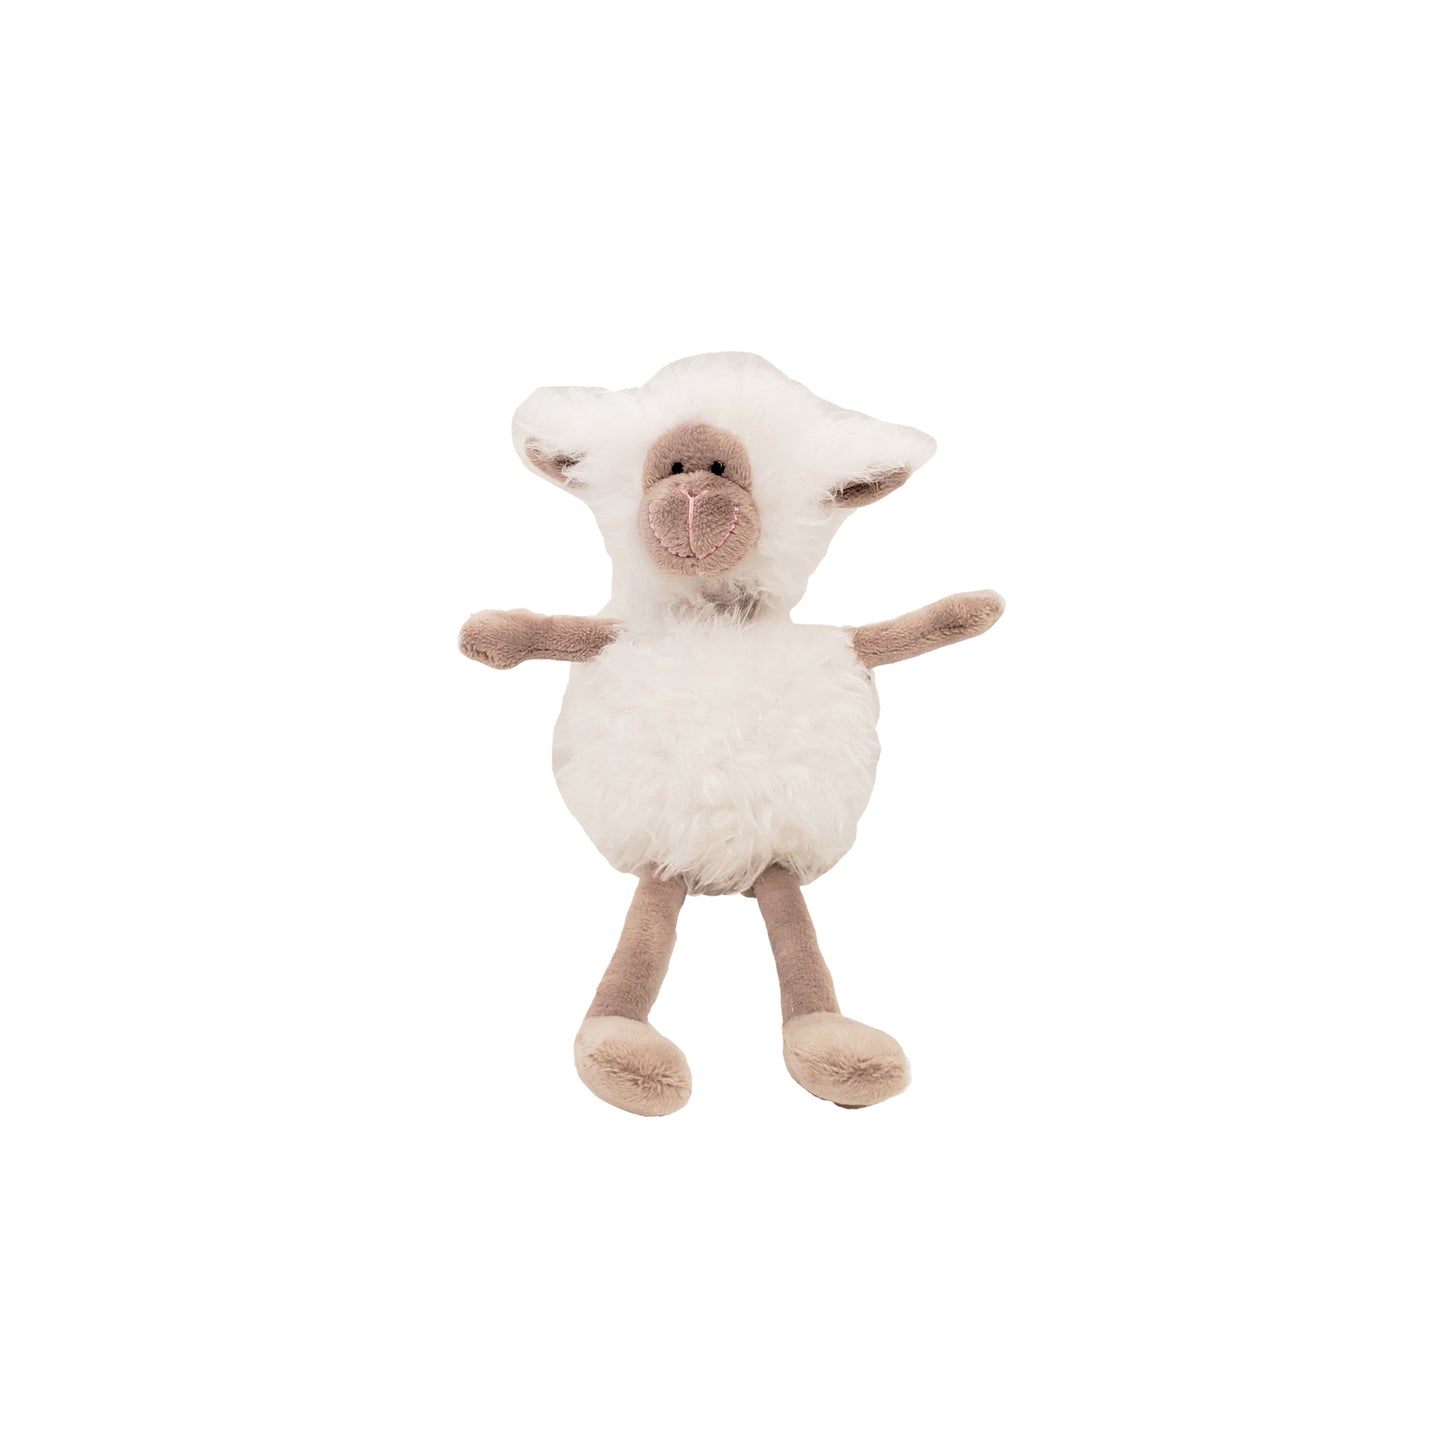 Warm Buddy - Wooly Sheep